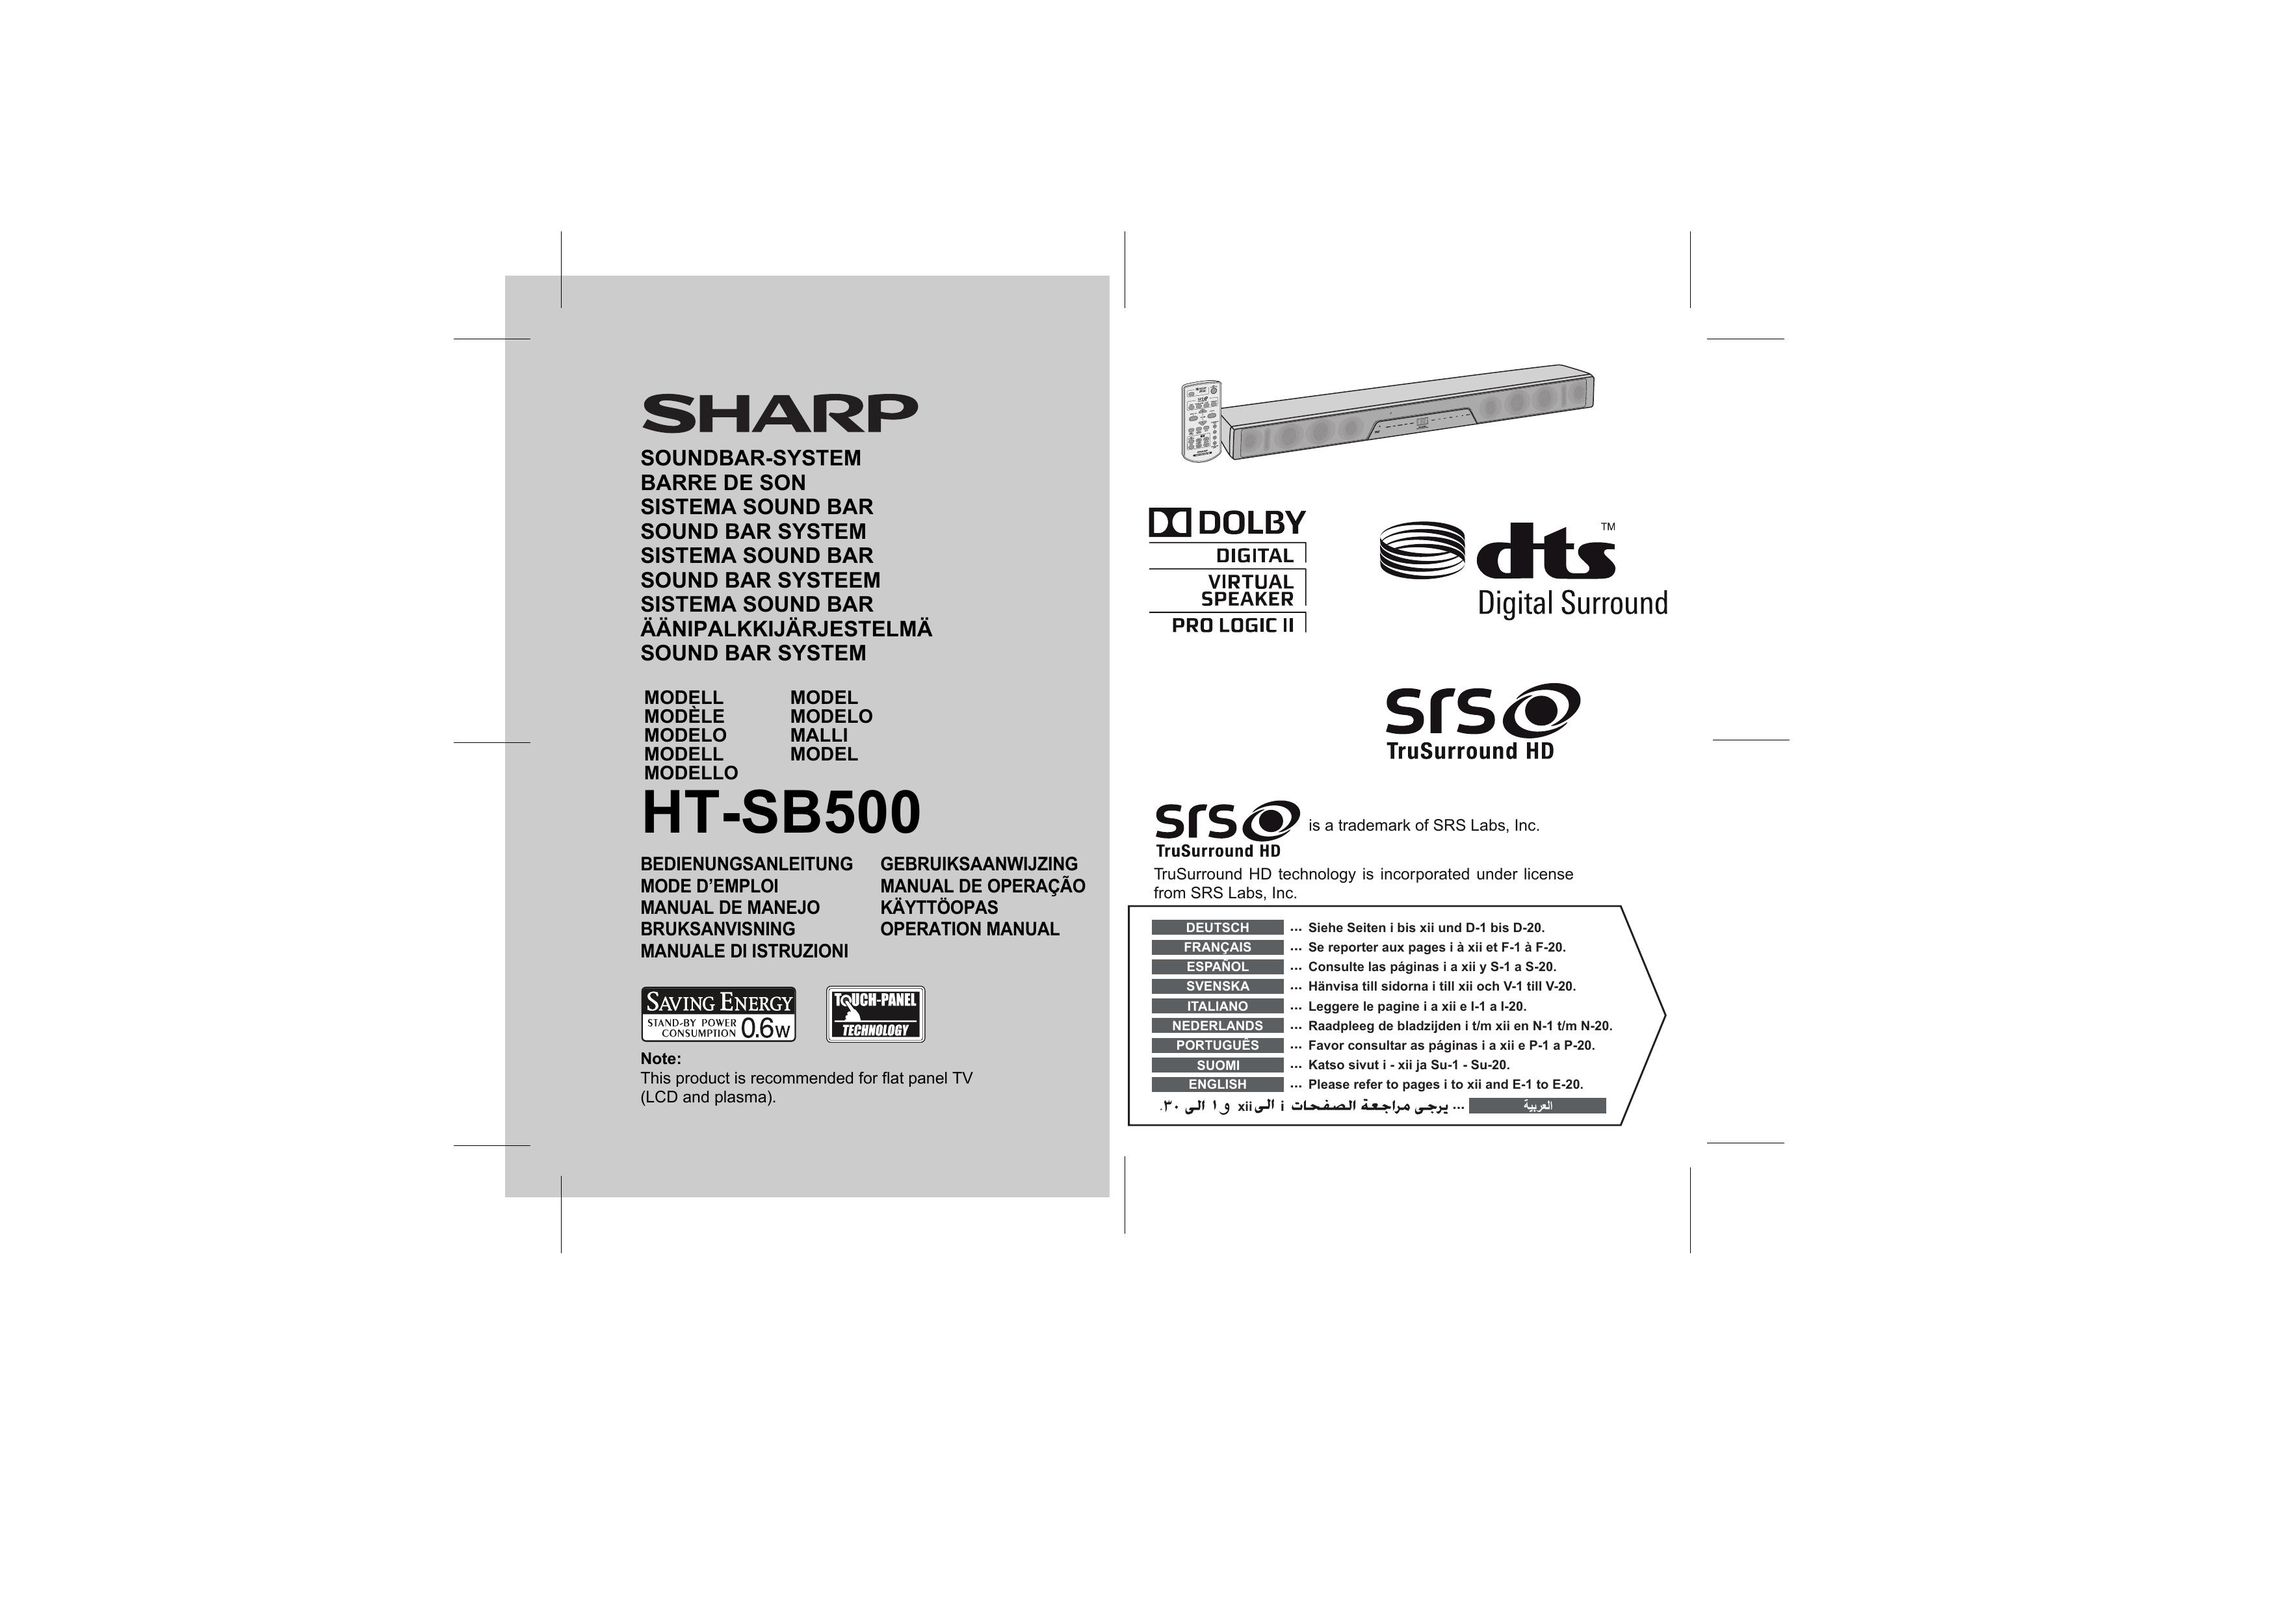 Sharp HT-SB500 Video Game Sound System User Manual